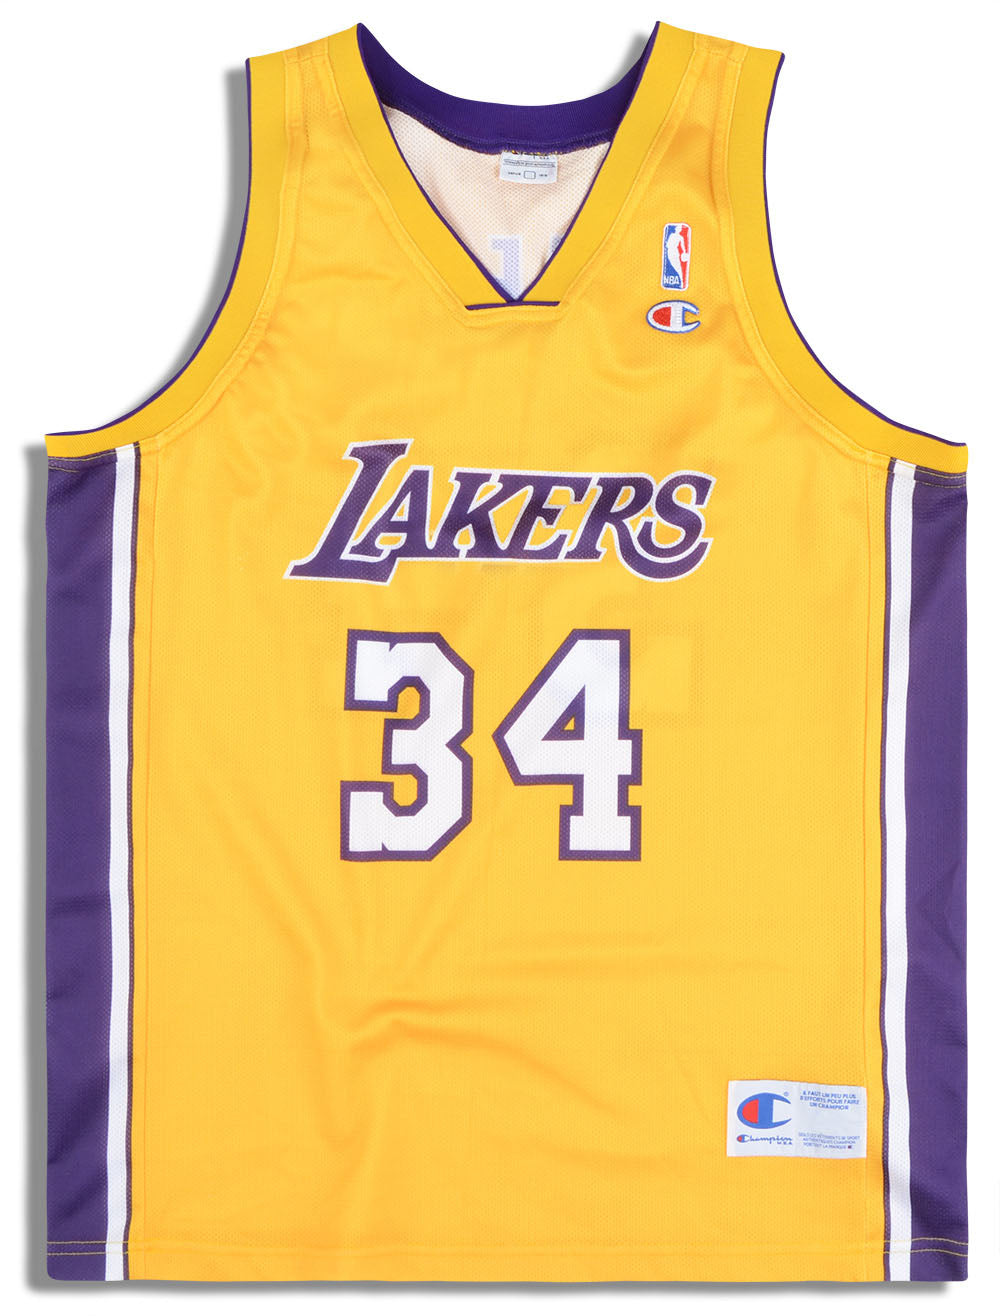 Lakers championship jersey